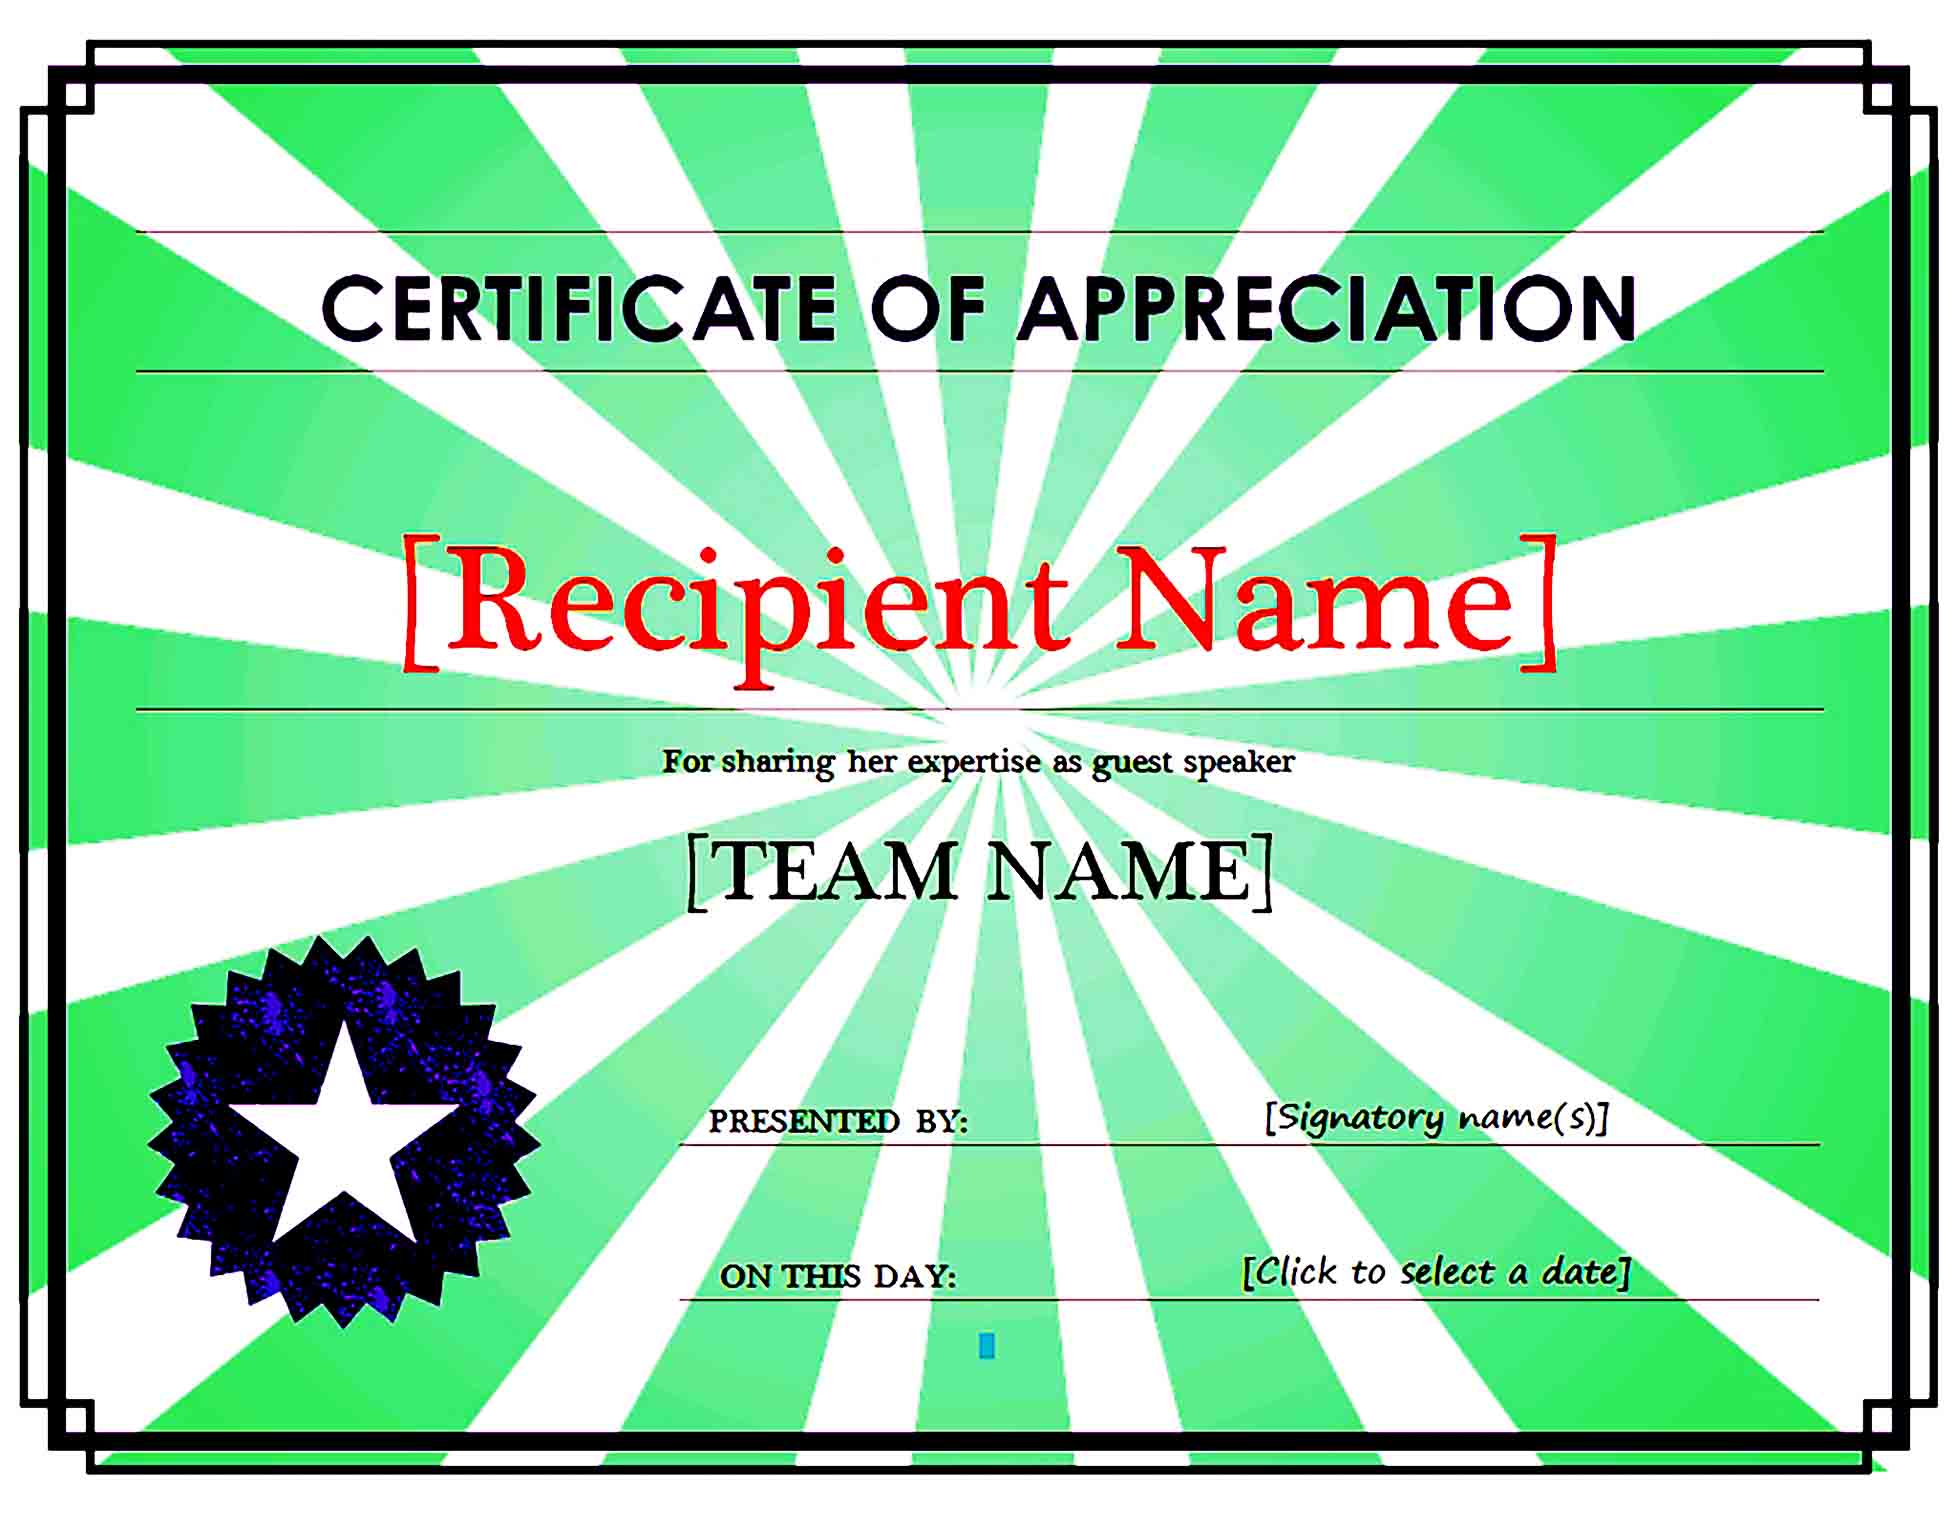 Certificate of Appreciation 14